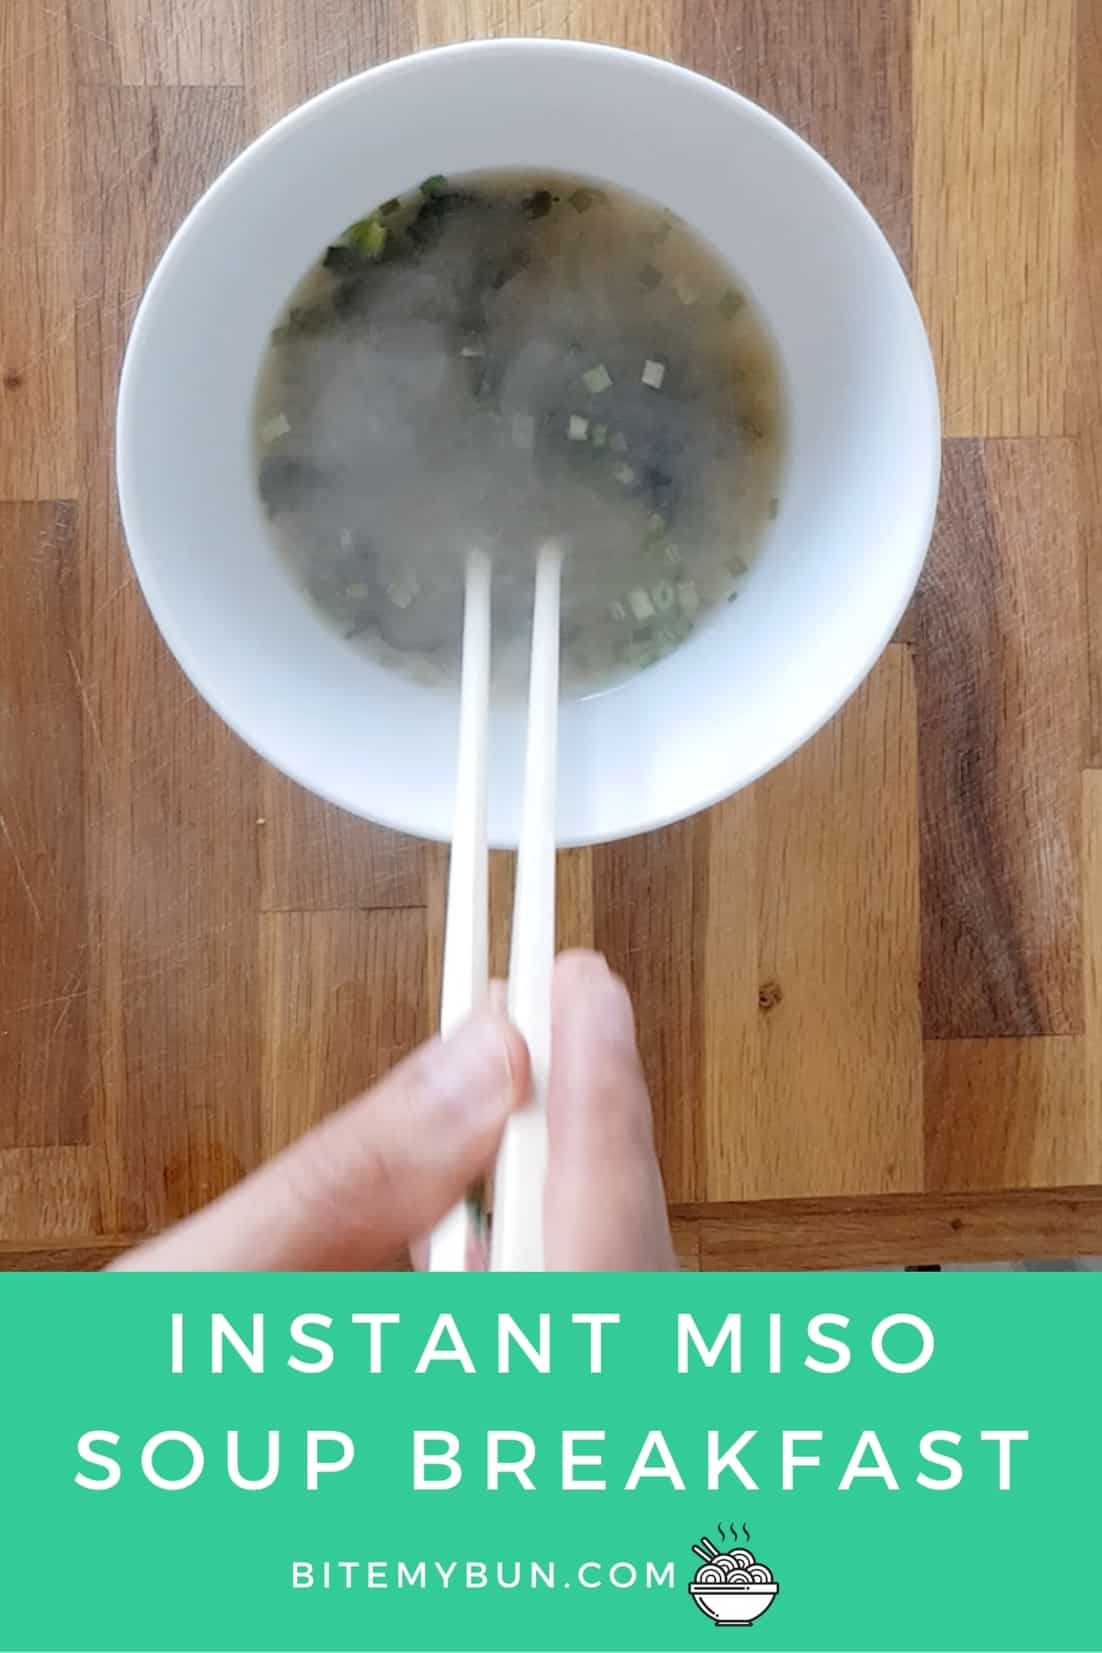 Instant miso soup breakfast in a bowl